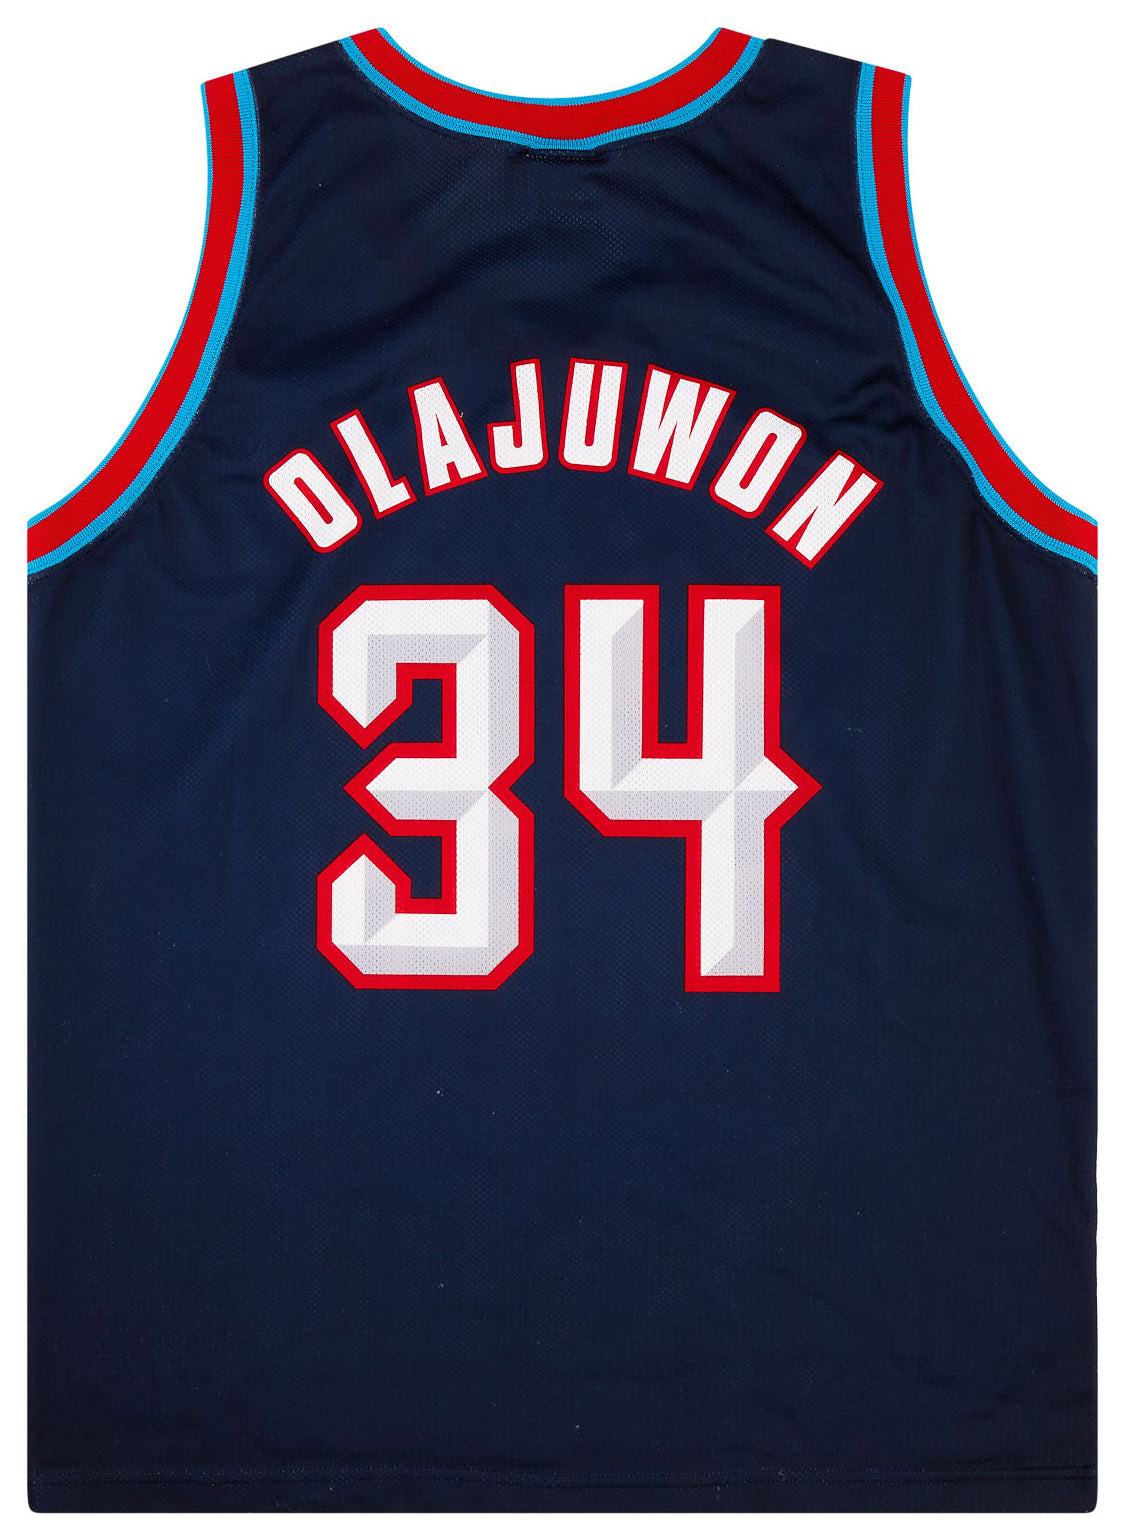 Hakeem Olajuwon Houston Rockets Adidas NBA Throwback Swingman Jersey - Red  